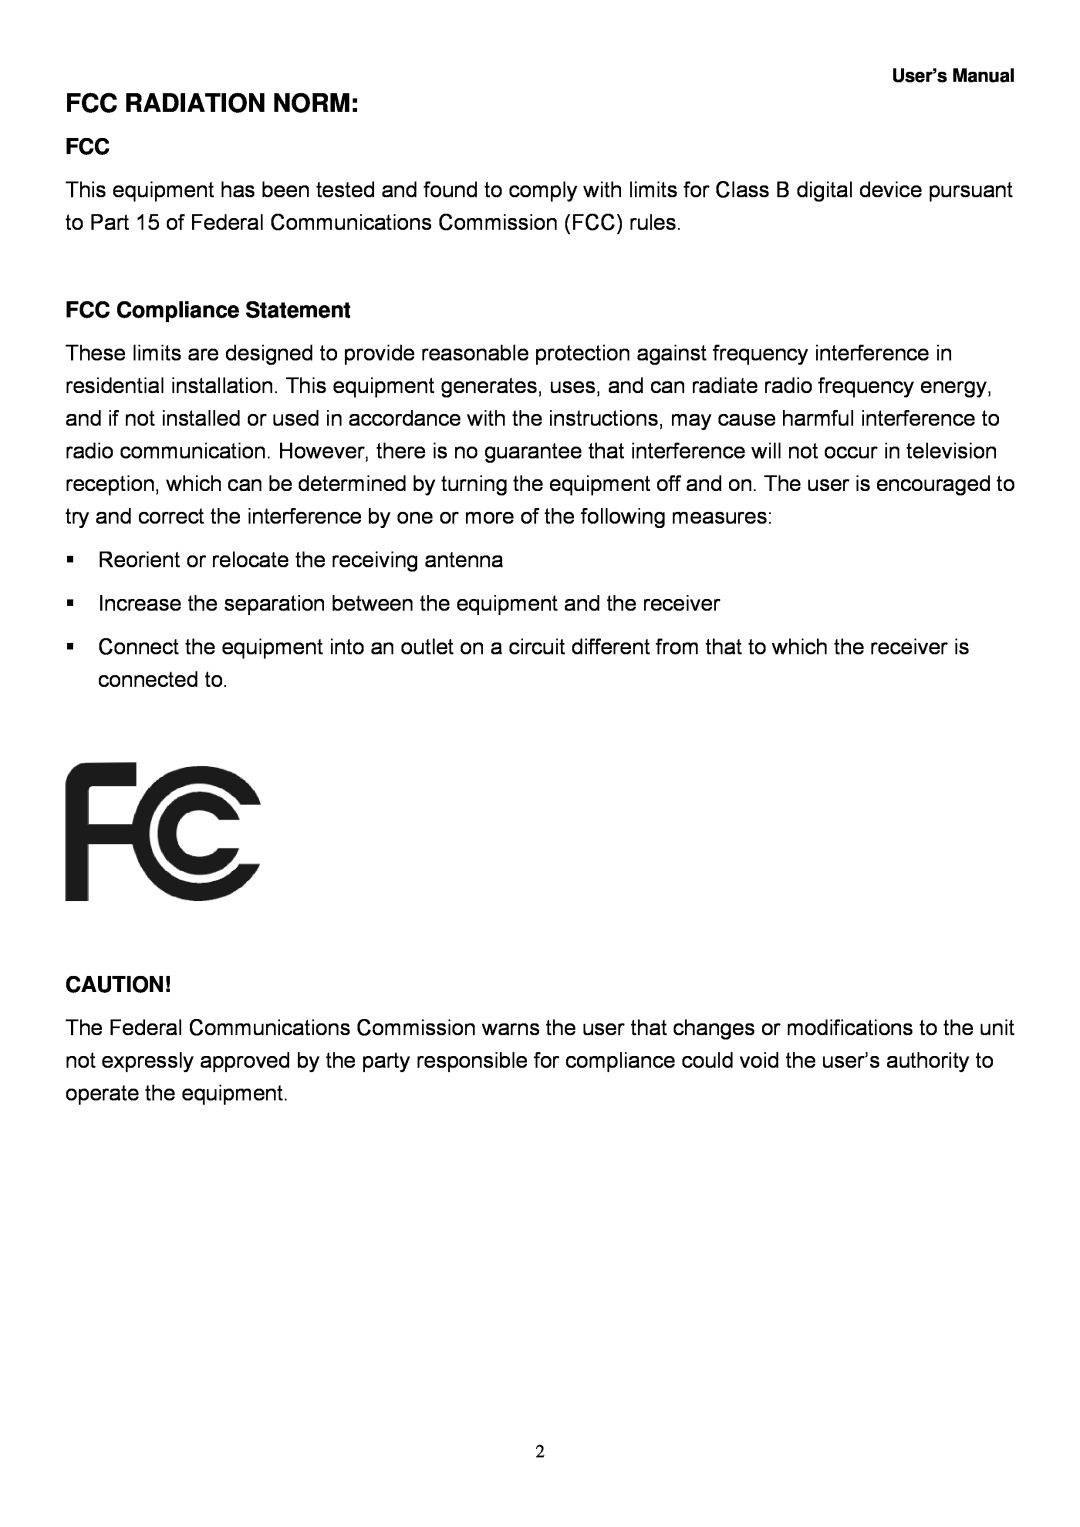 Night Owl Optics Night Owl, 4BL manual Fcc Radiation Norm, FCC Compliance Statement 